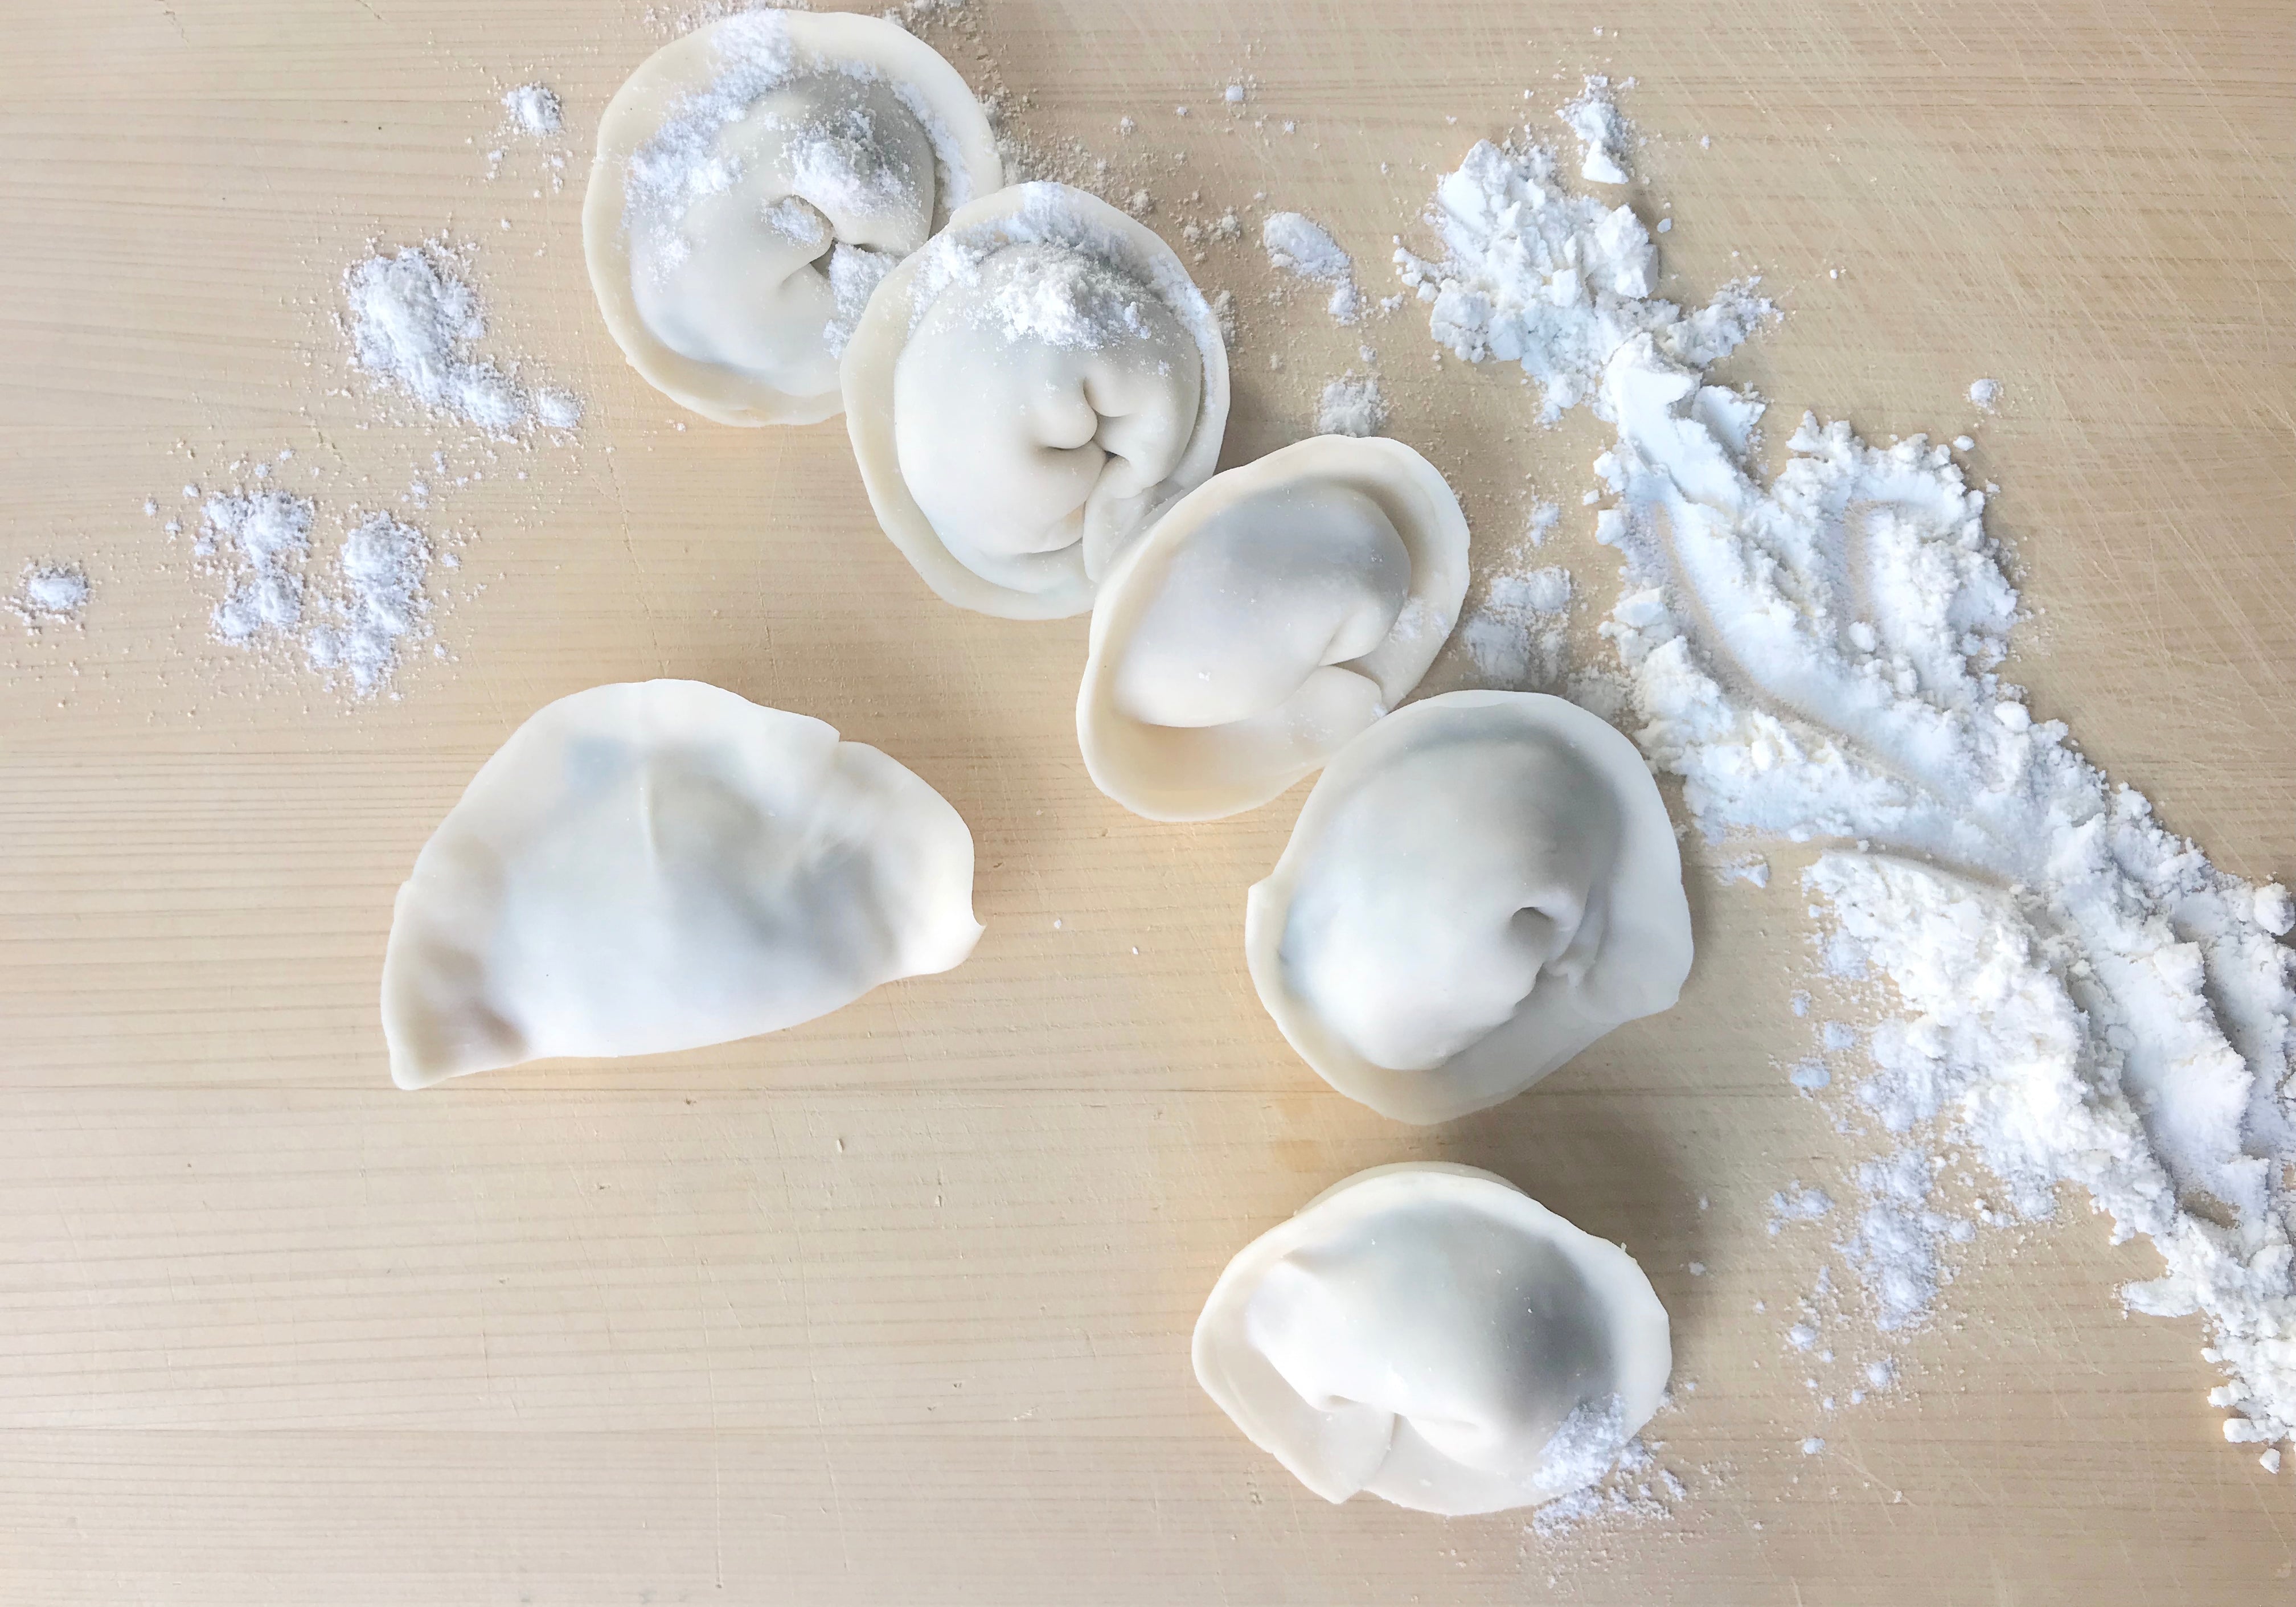 Food Traditions: Make Dumplings with Kids